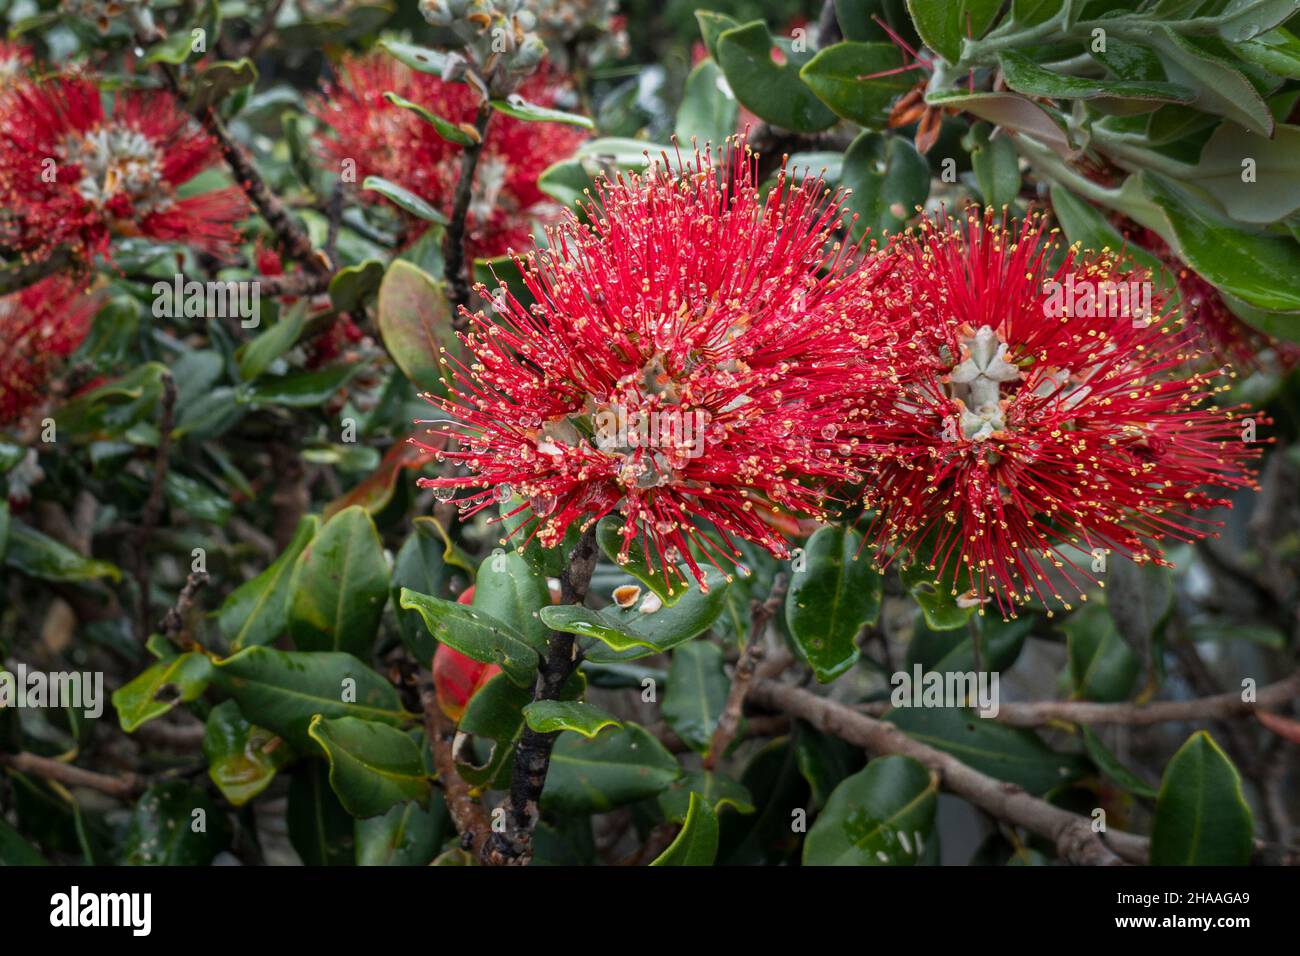 Pohutukawa tree in full bloom in the rain. New Zealand Christmas Tree. Stock Photo